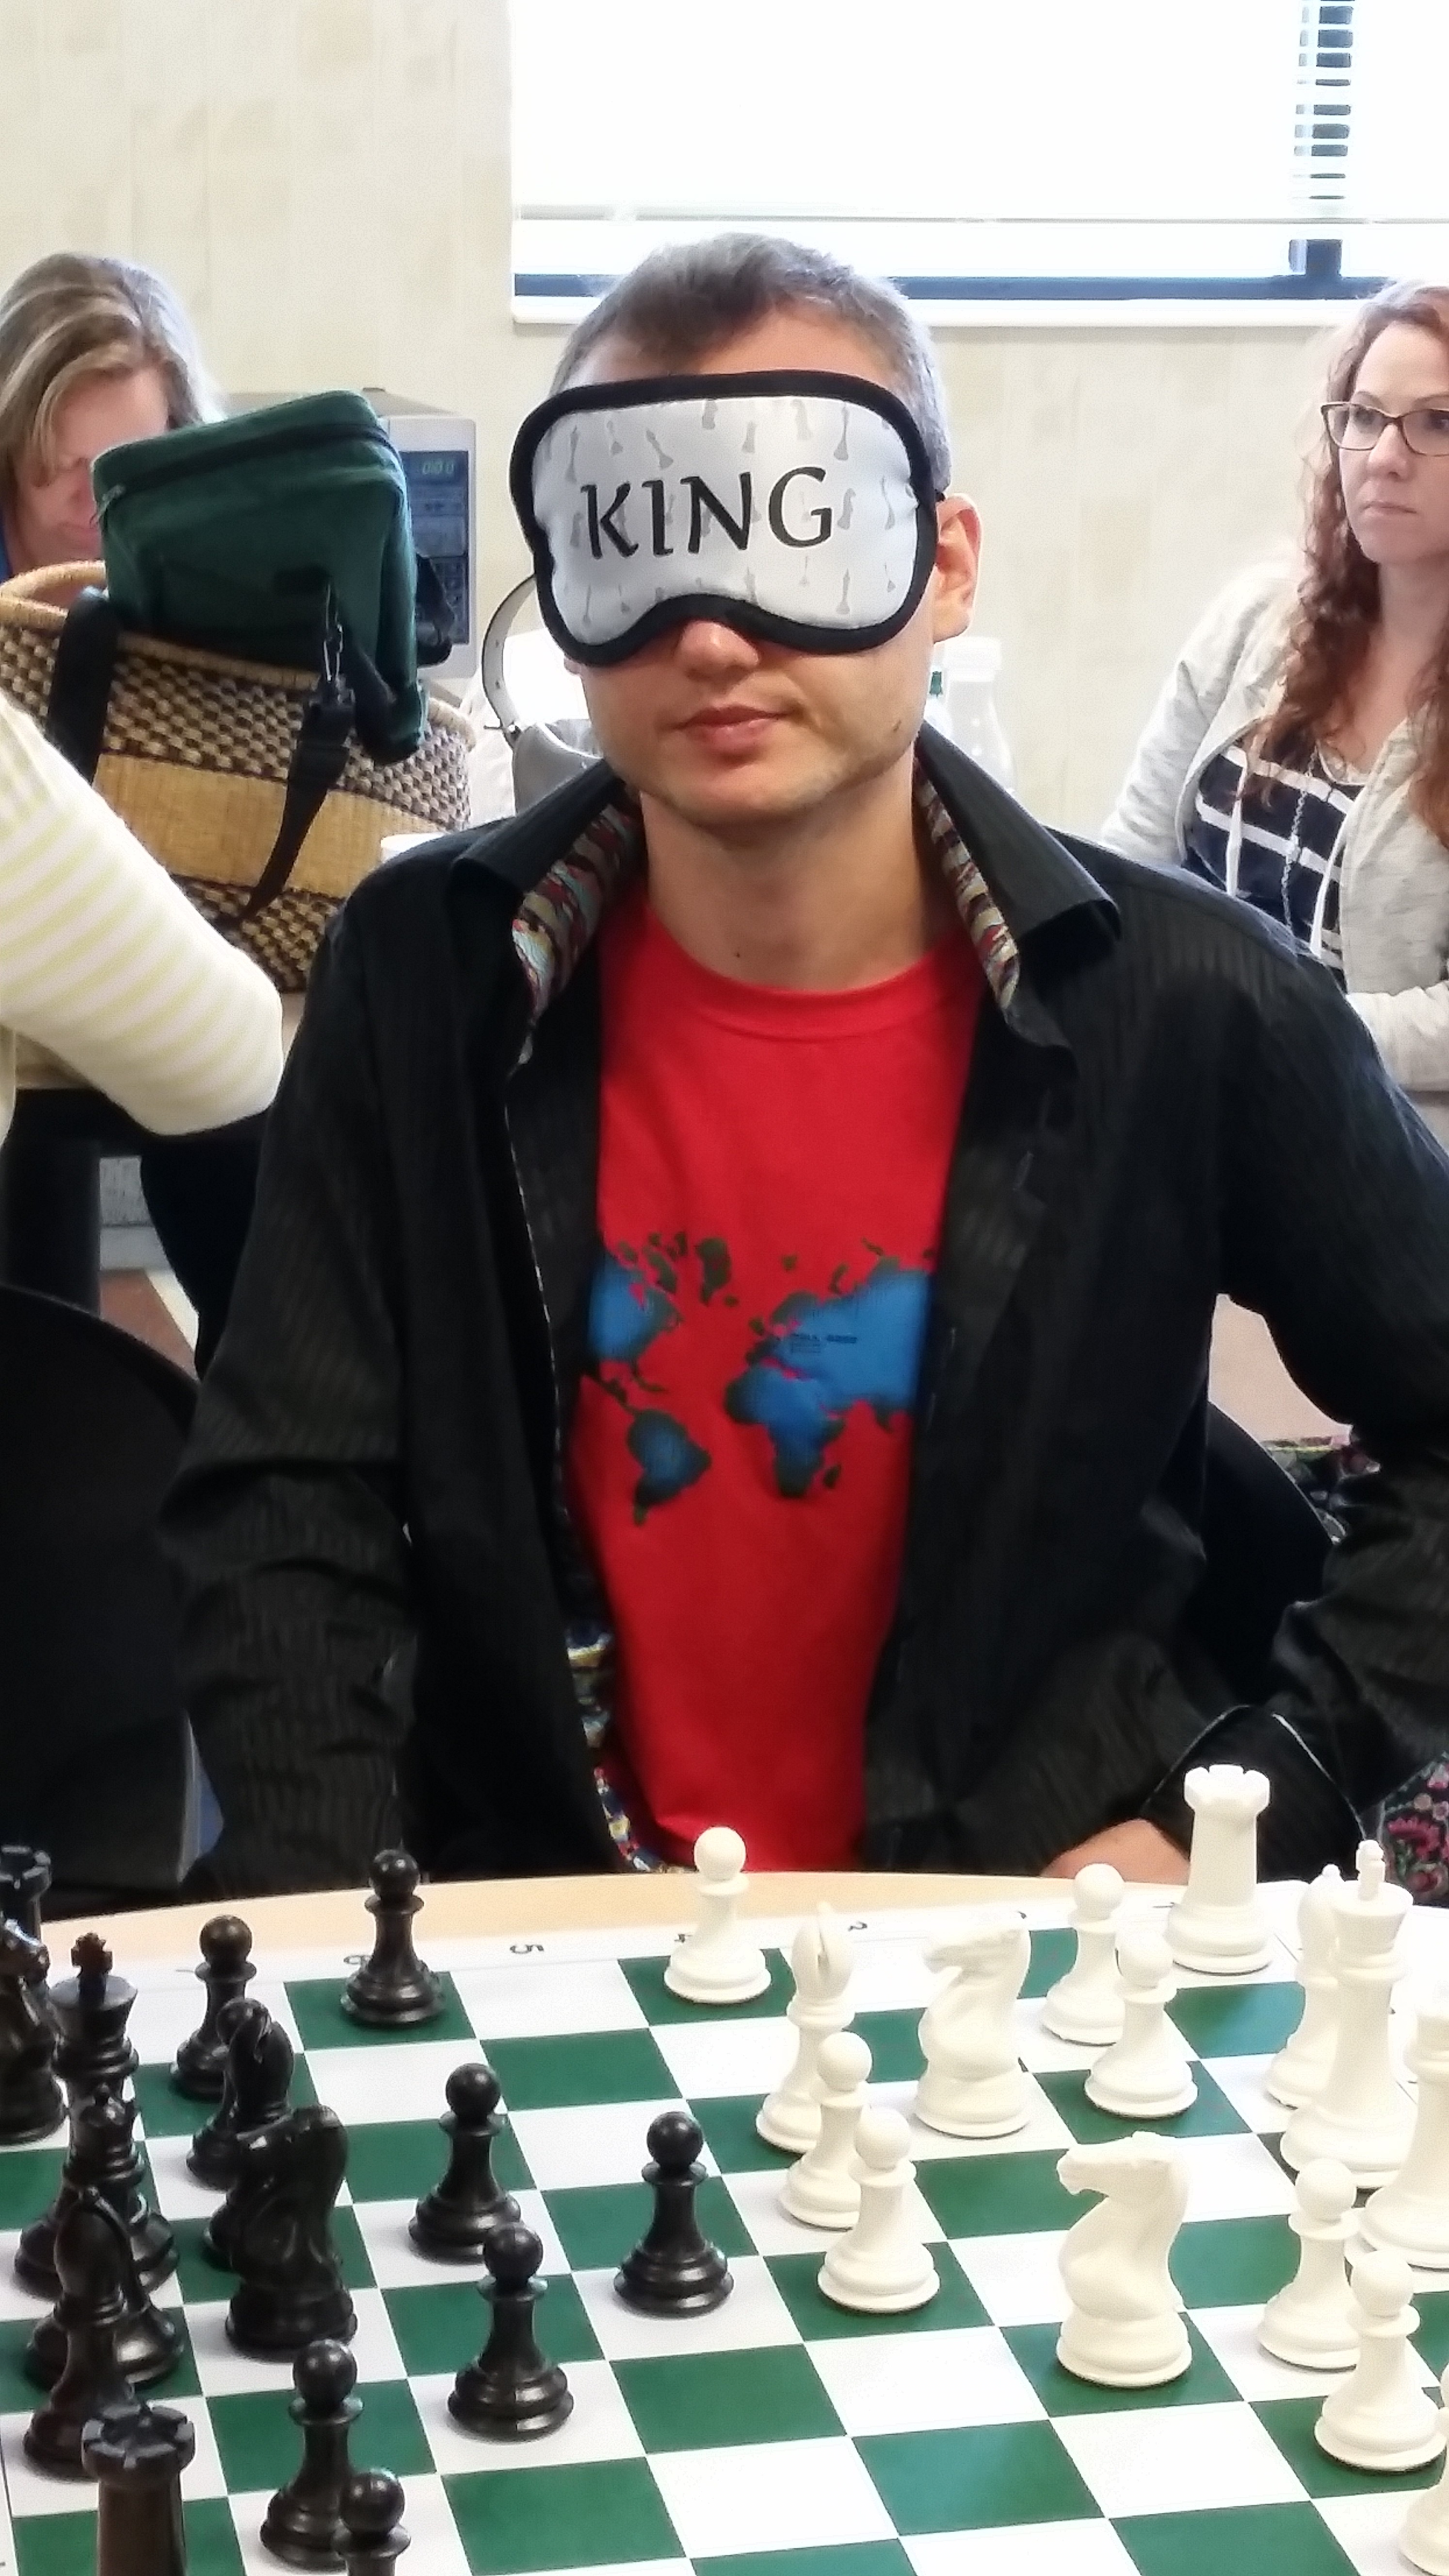 Blindfold Chess